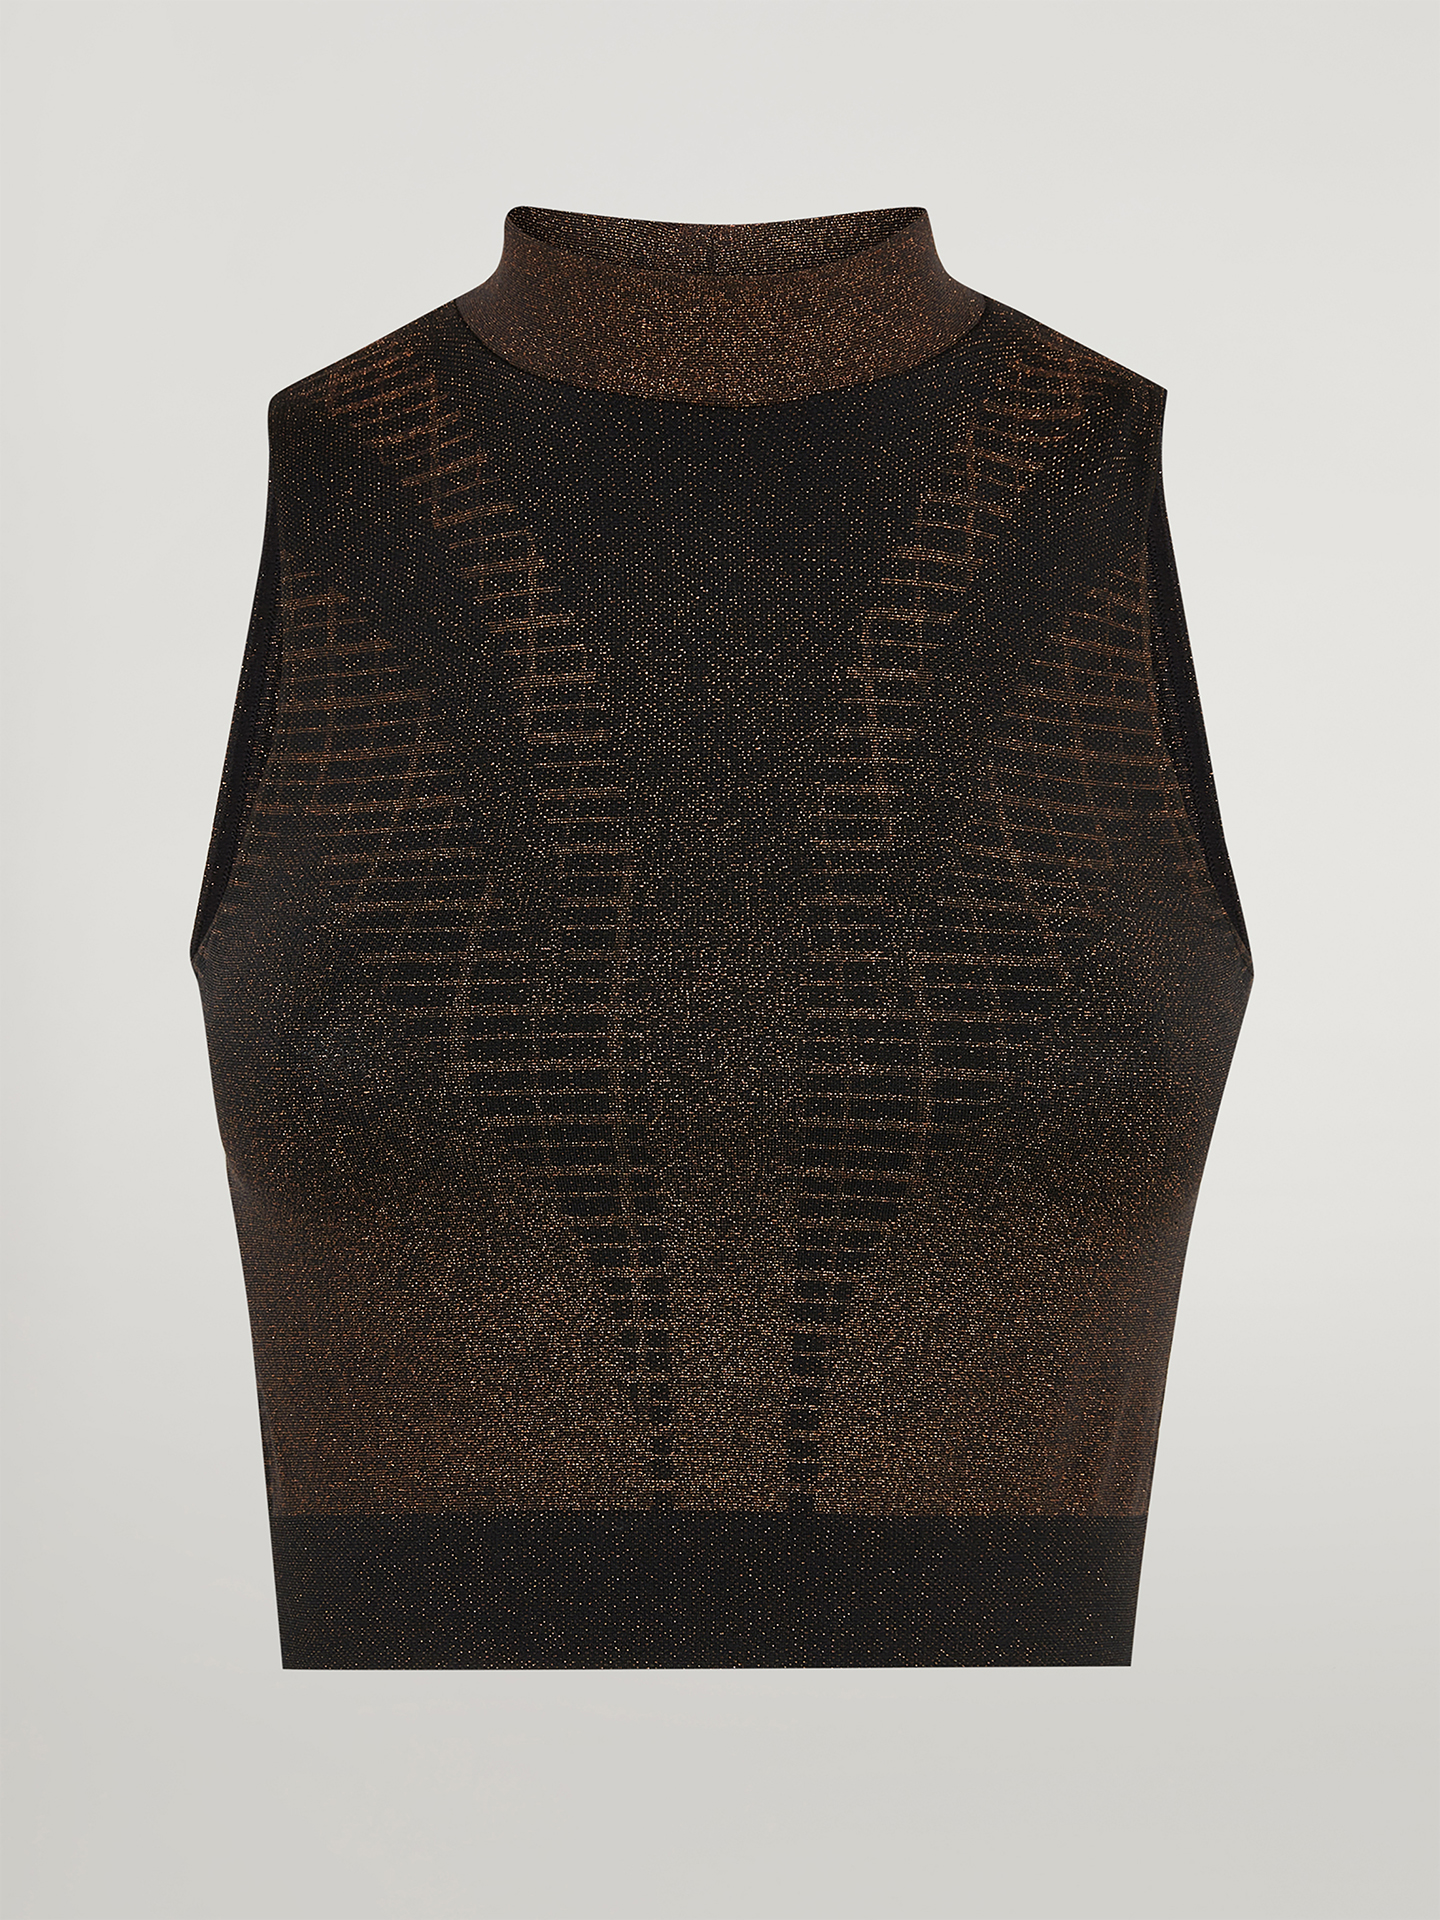 Wolford - Shiny Grid Top Sleeveless, Frau, black/copper, Größe: M günstig online kaufen